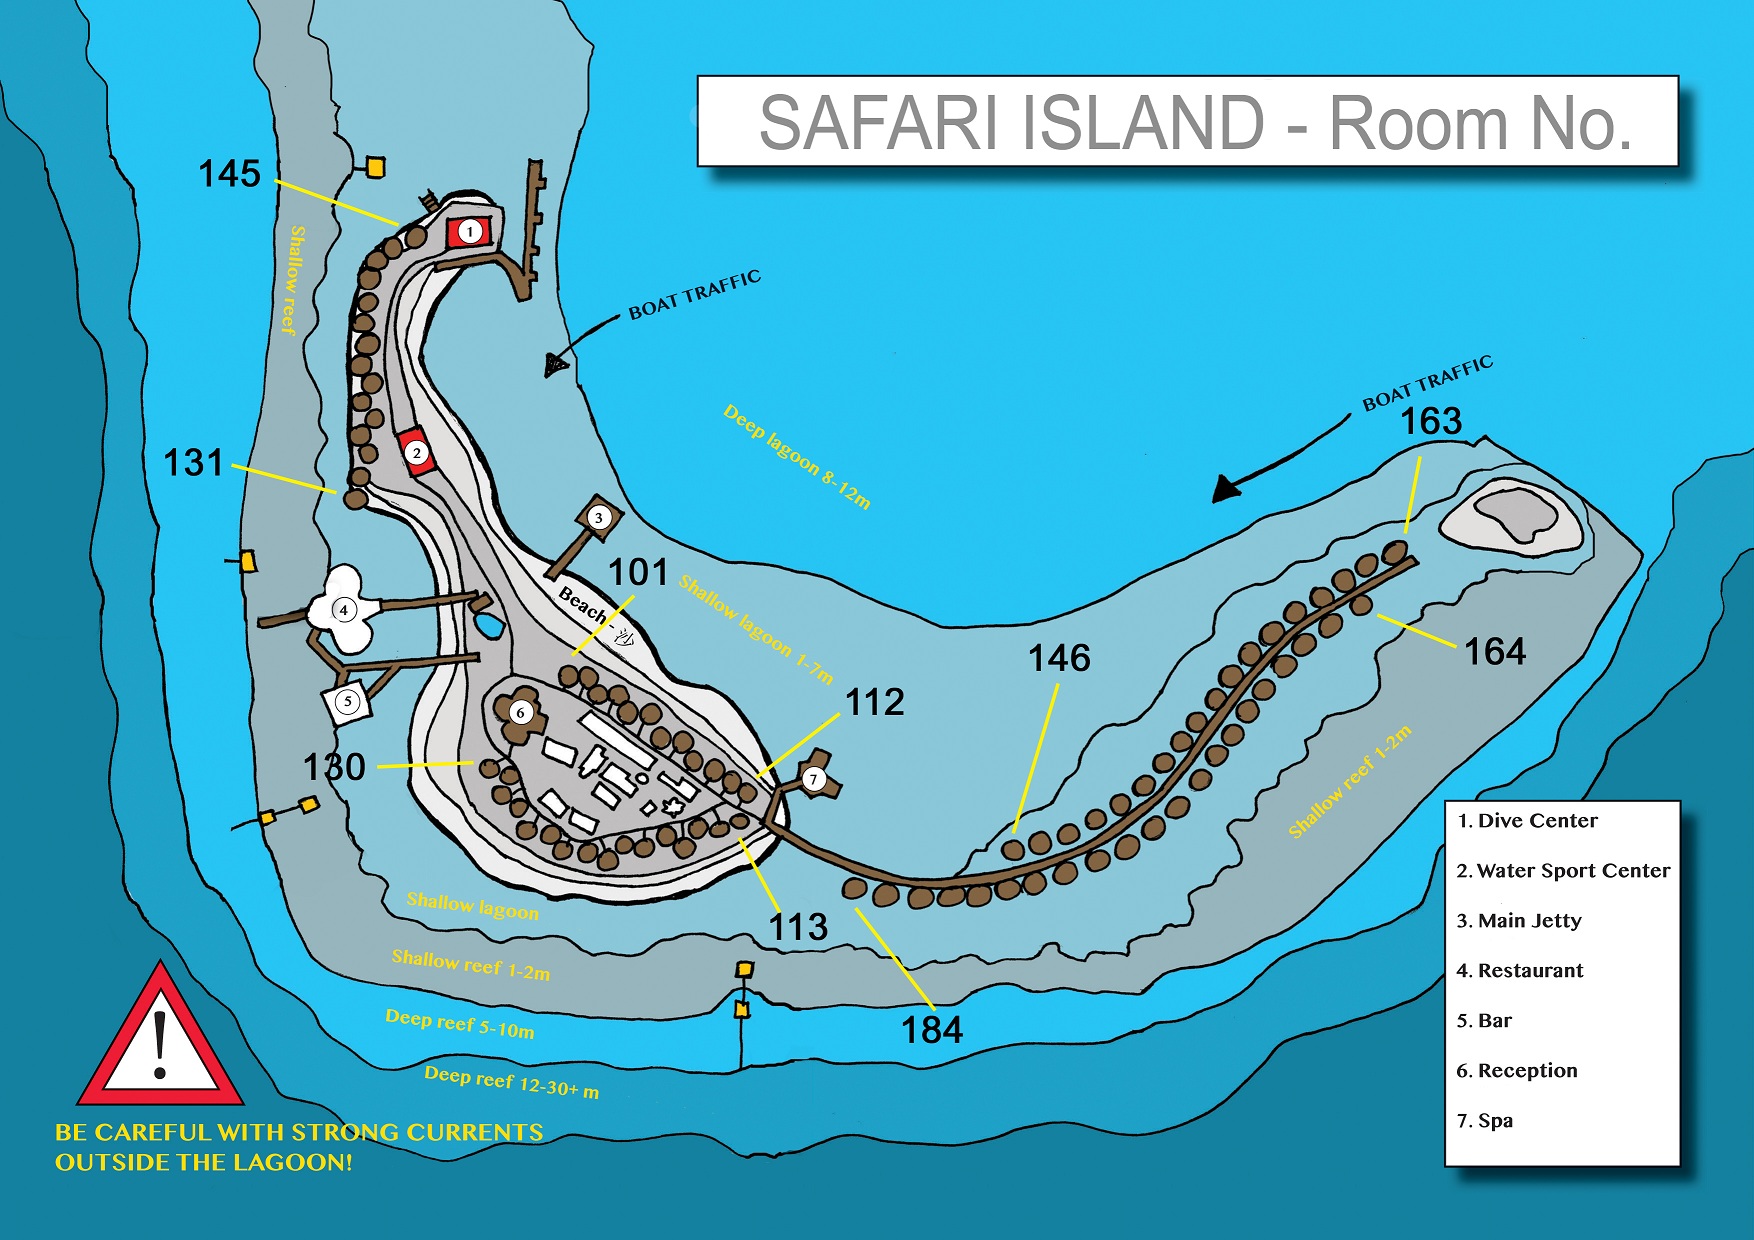 Safari Island Map Room No